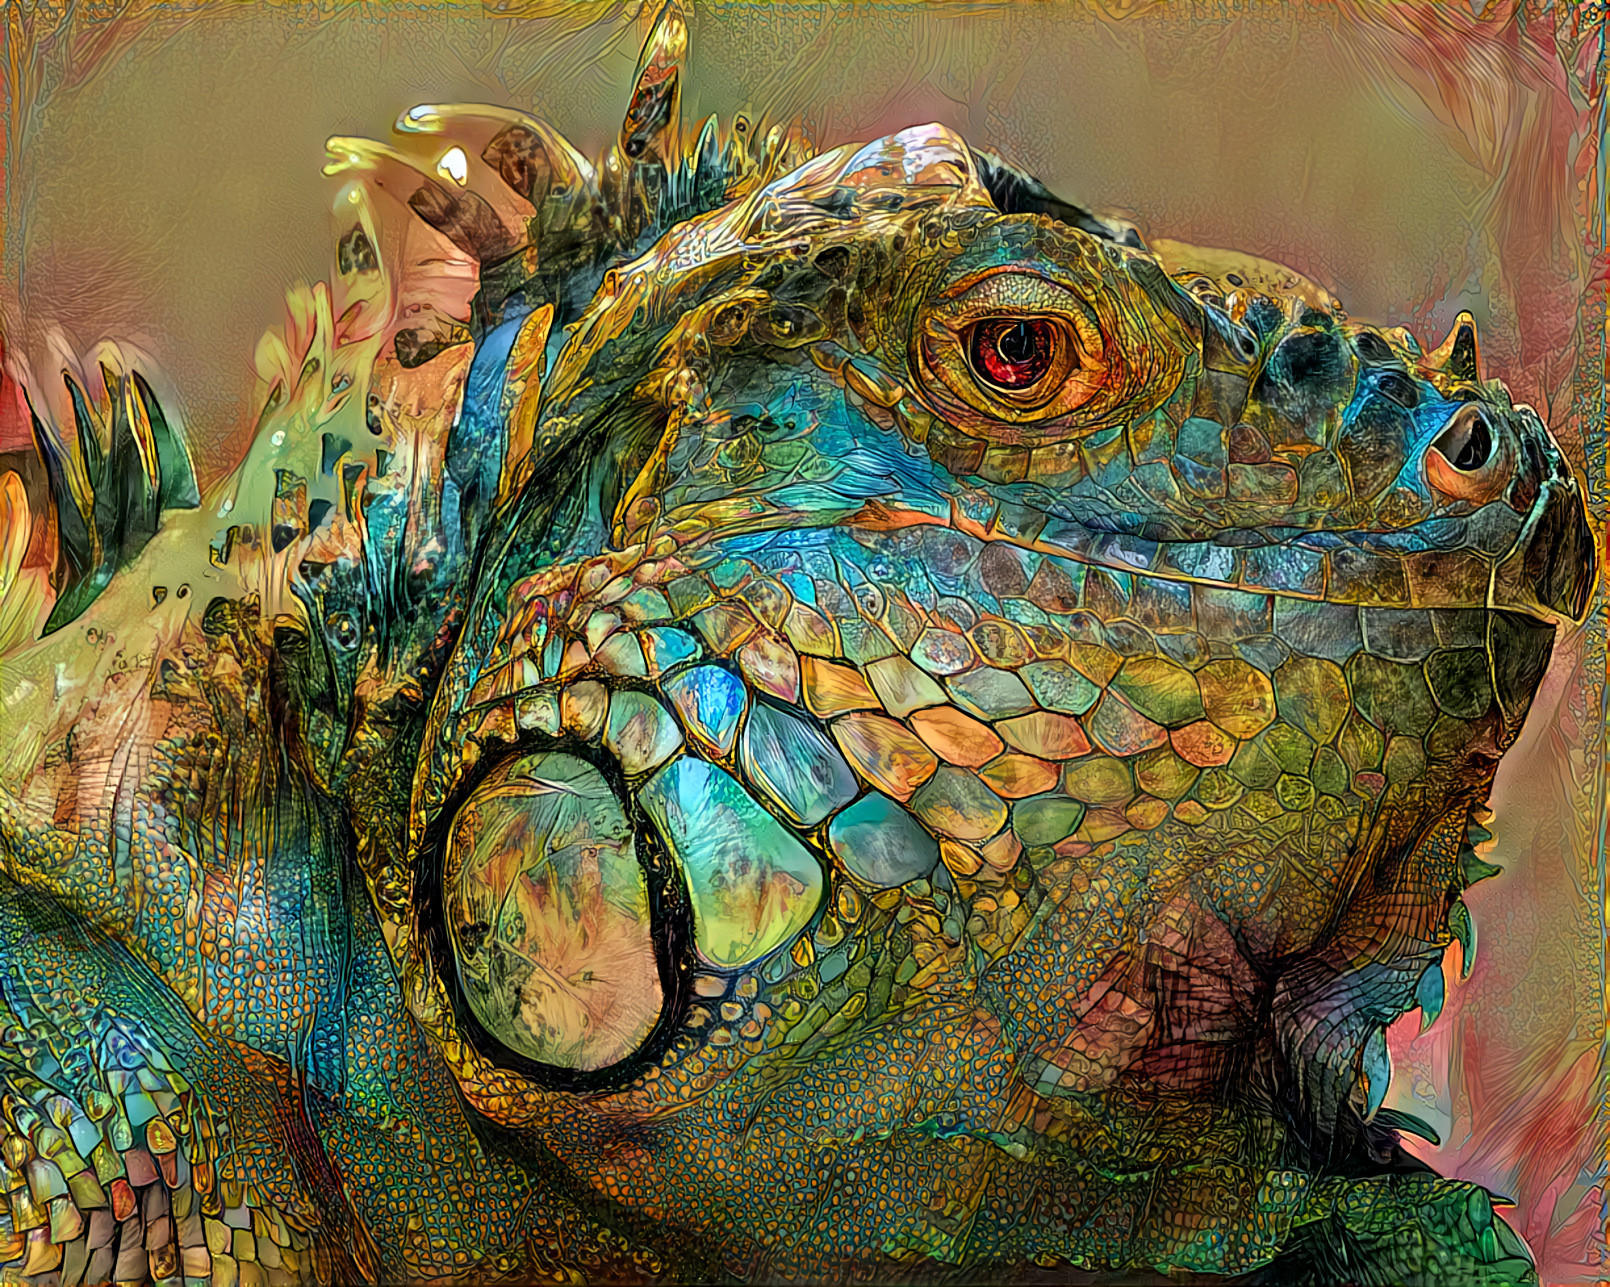 Iguana. Original photograph by Ryan Hyde on Unsplash.